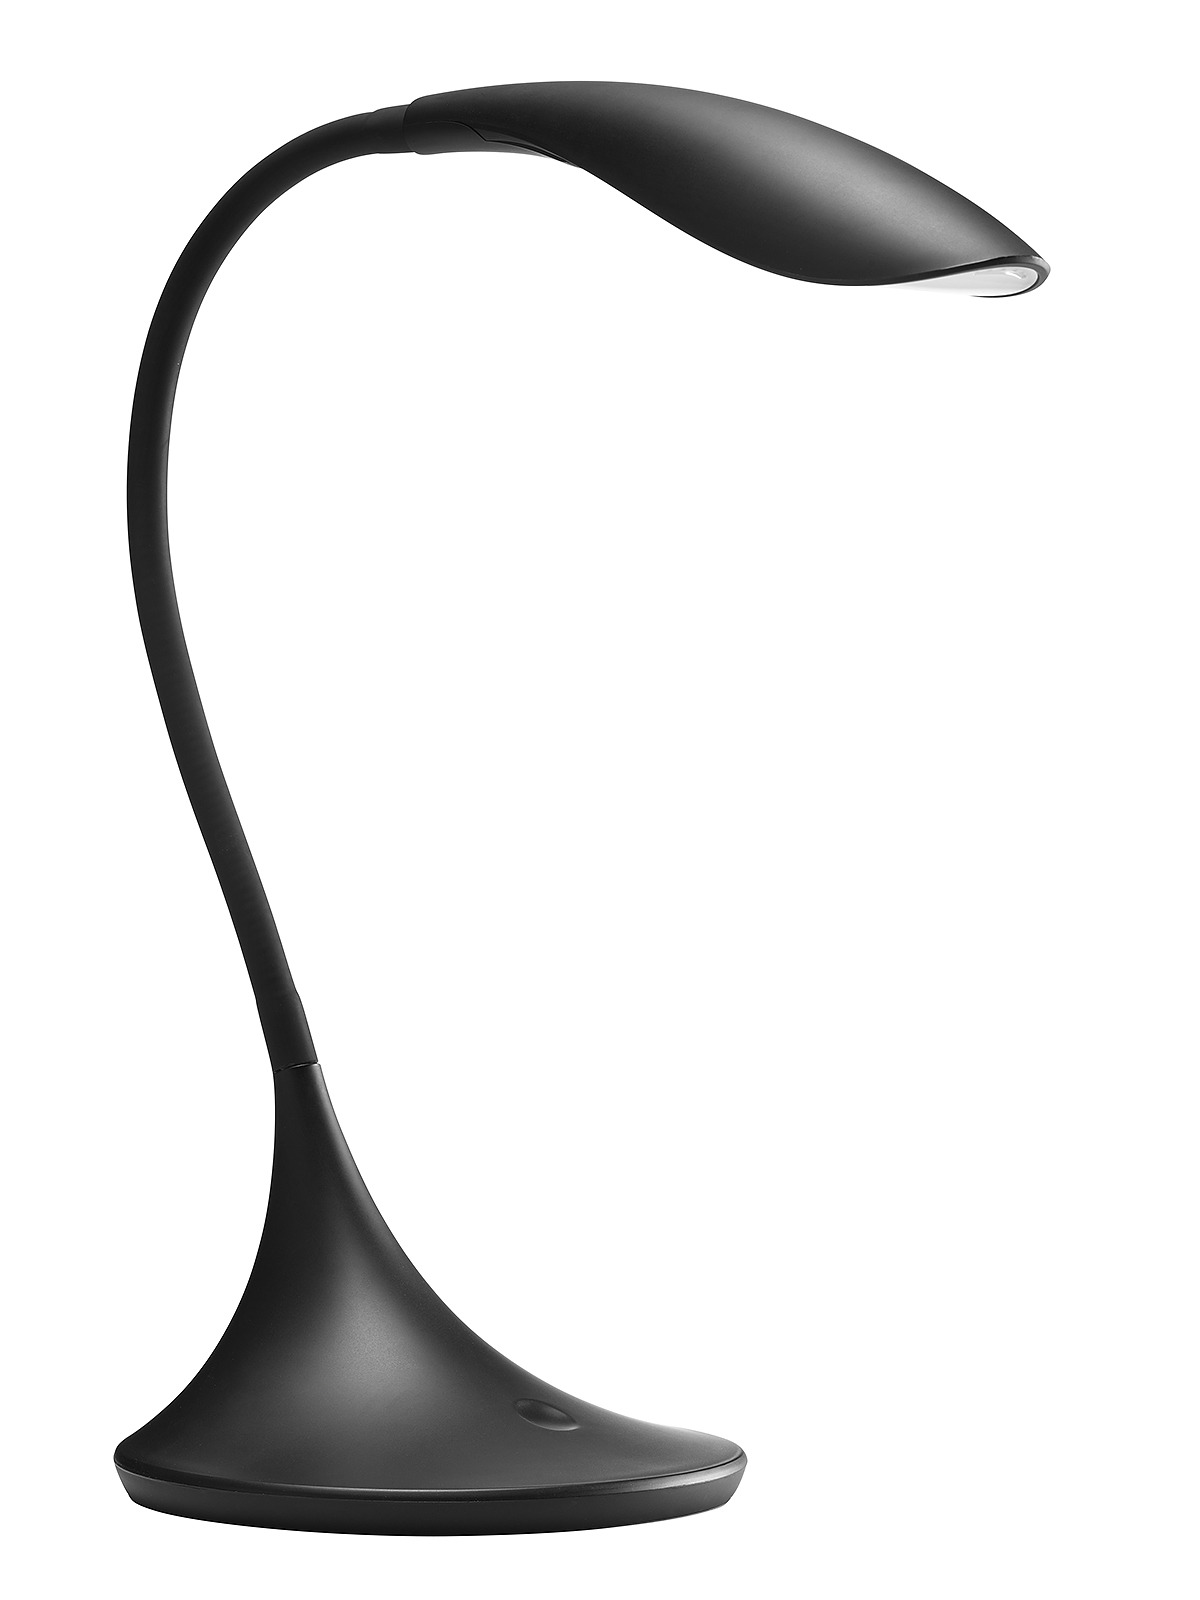 NIELSEN Belysning og lamper – Lampeskærme – Lysekroner – Pendler Gulvlamper – Bordlamper - Stofledning